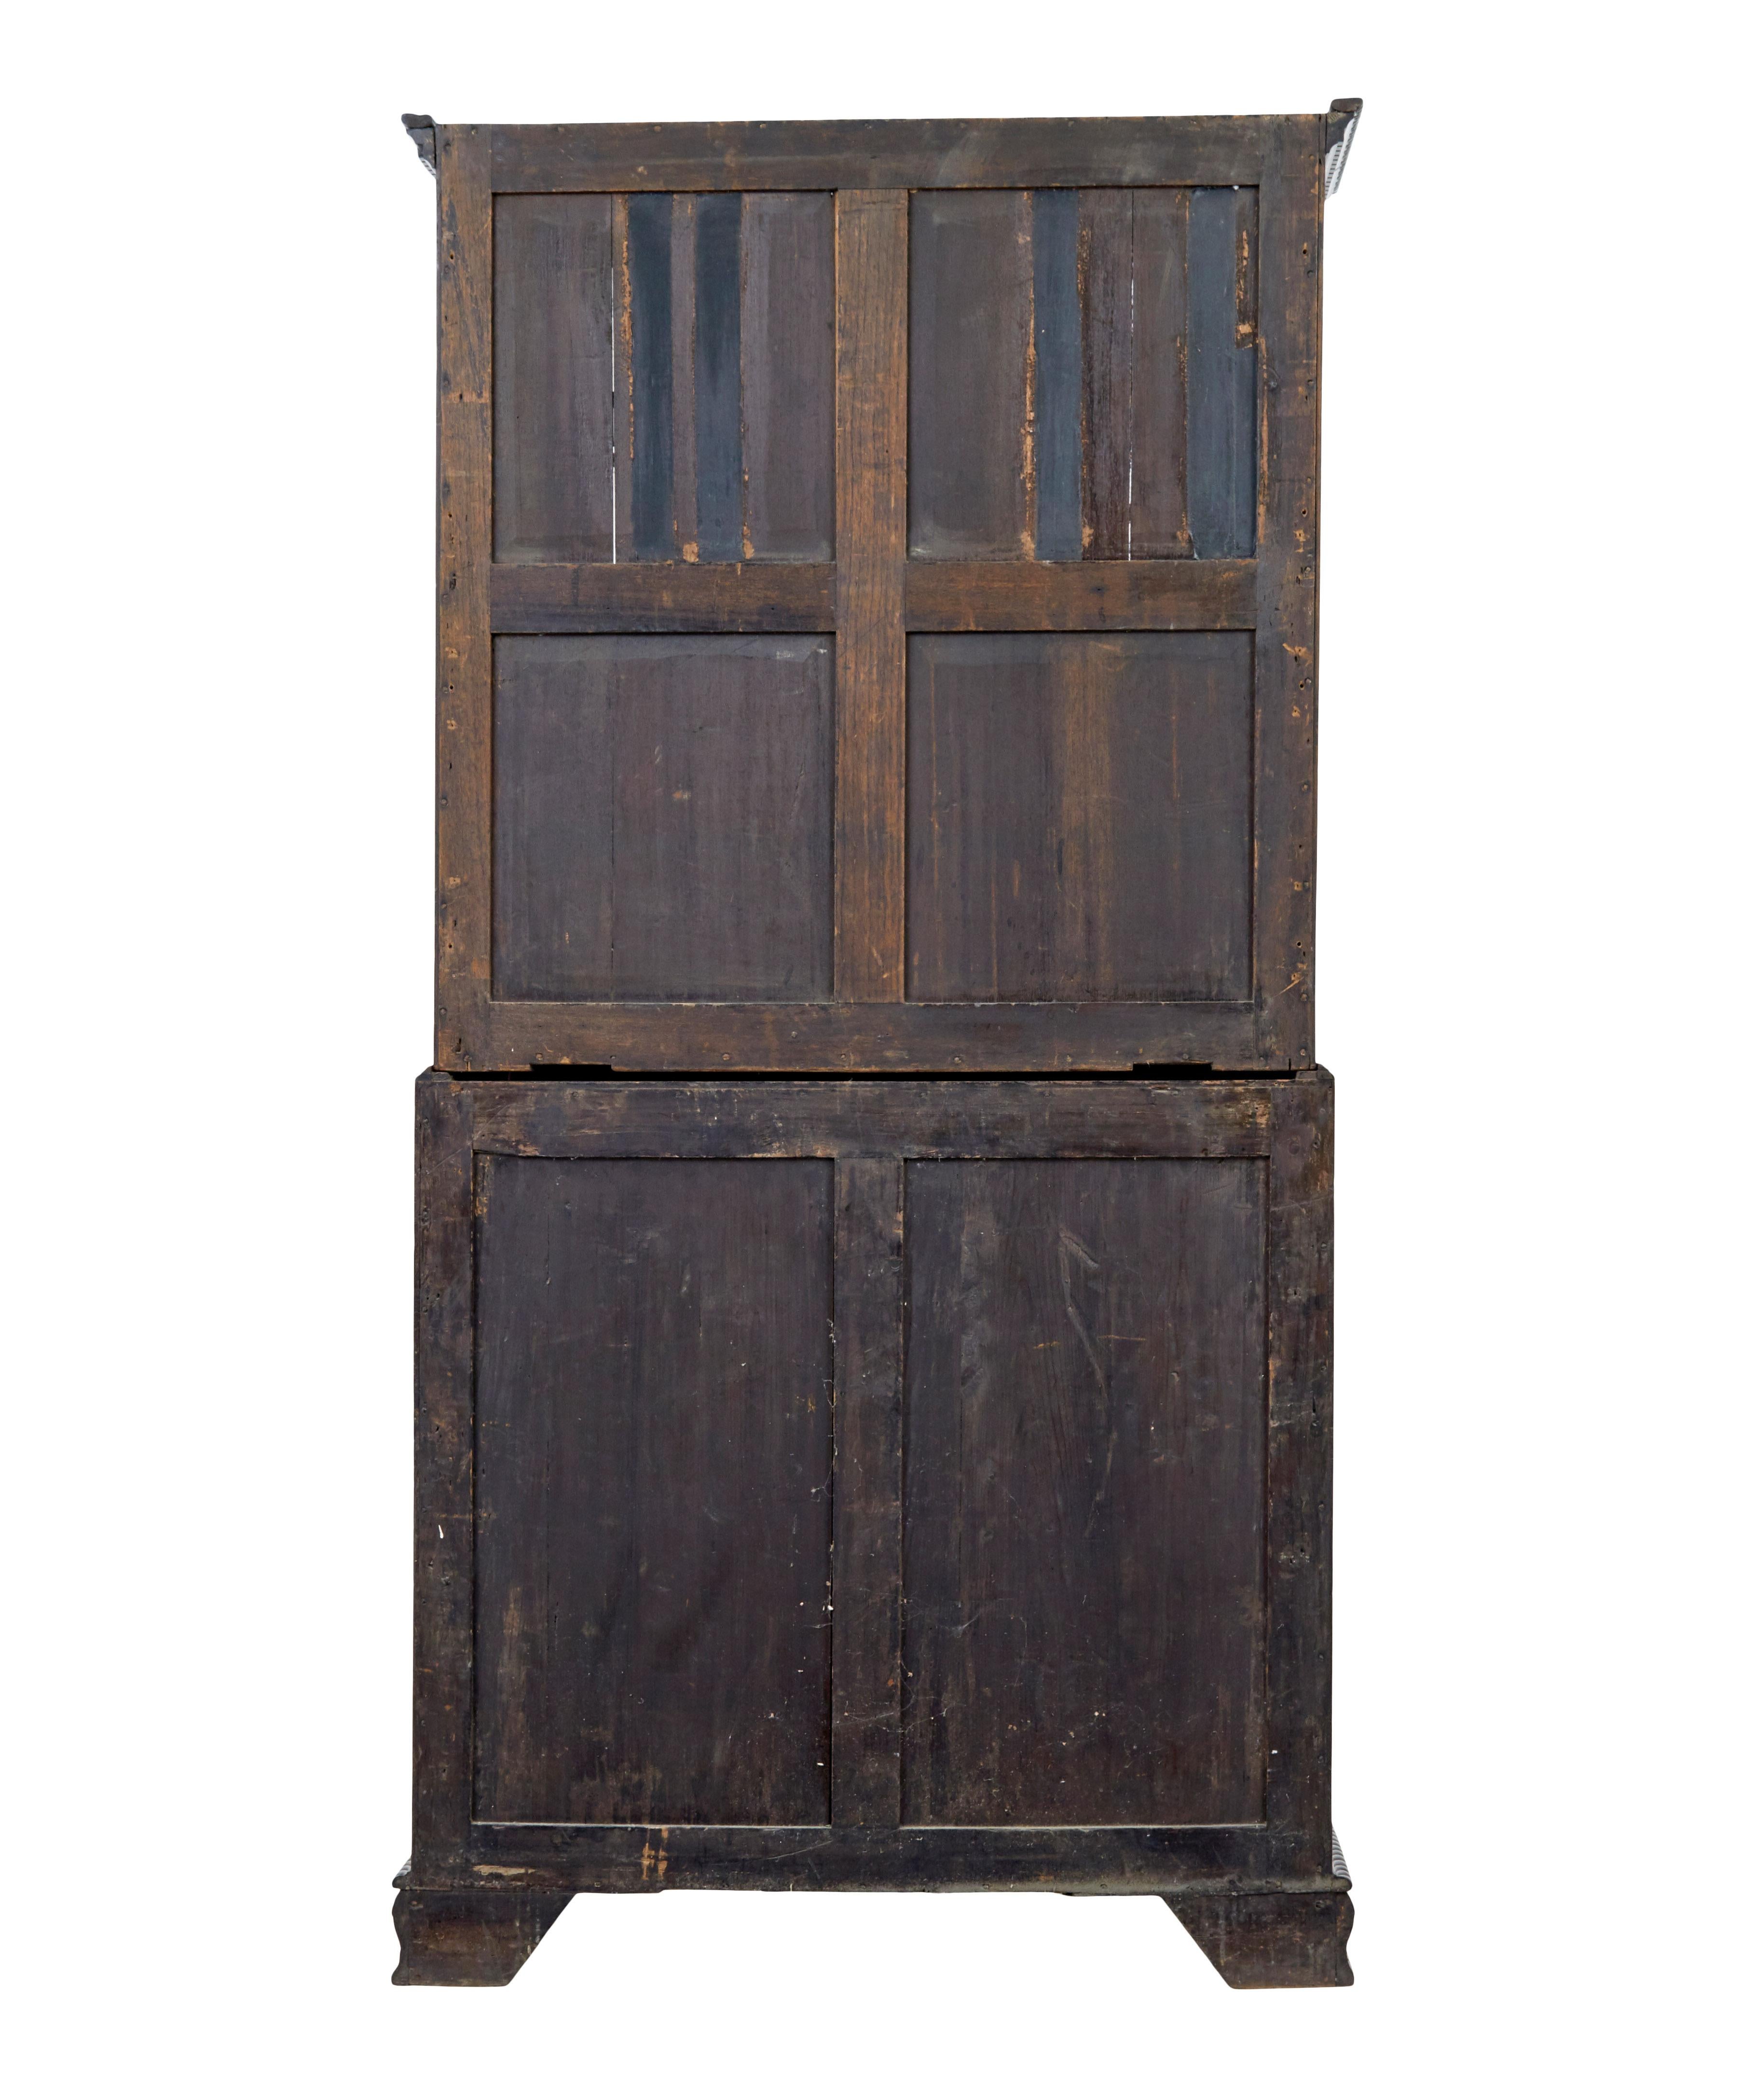 Glazed Early 19th century carved mahogany bureau bookcase For Sale